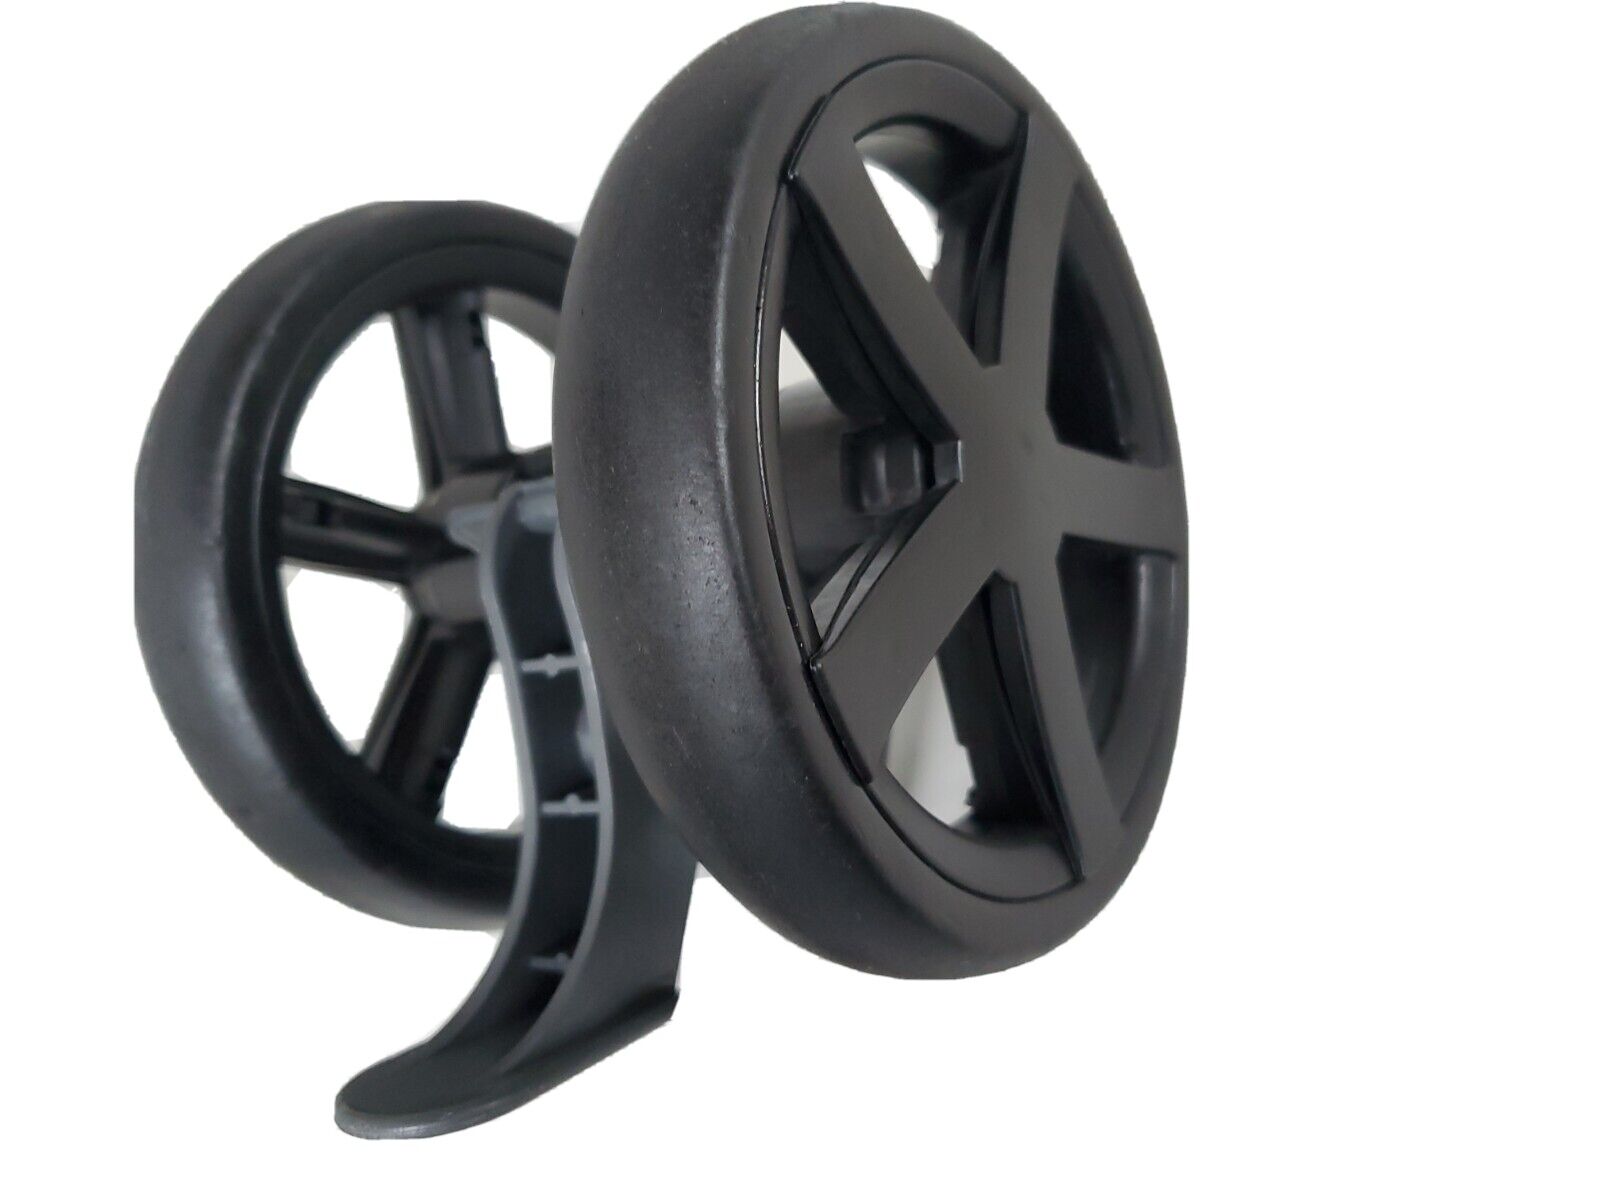 Evenflo Umbrella Single Stroller Rear Wheel Tire Replacement Part #121820gp